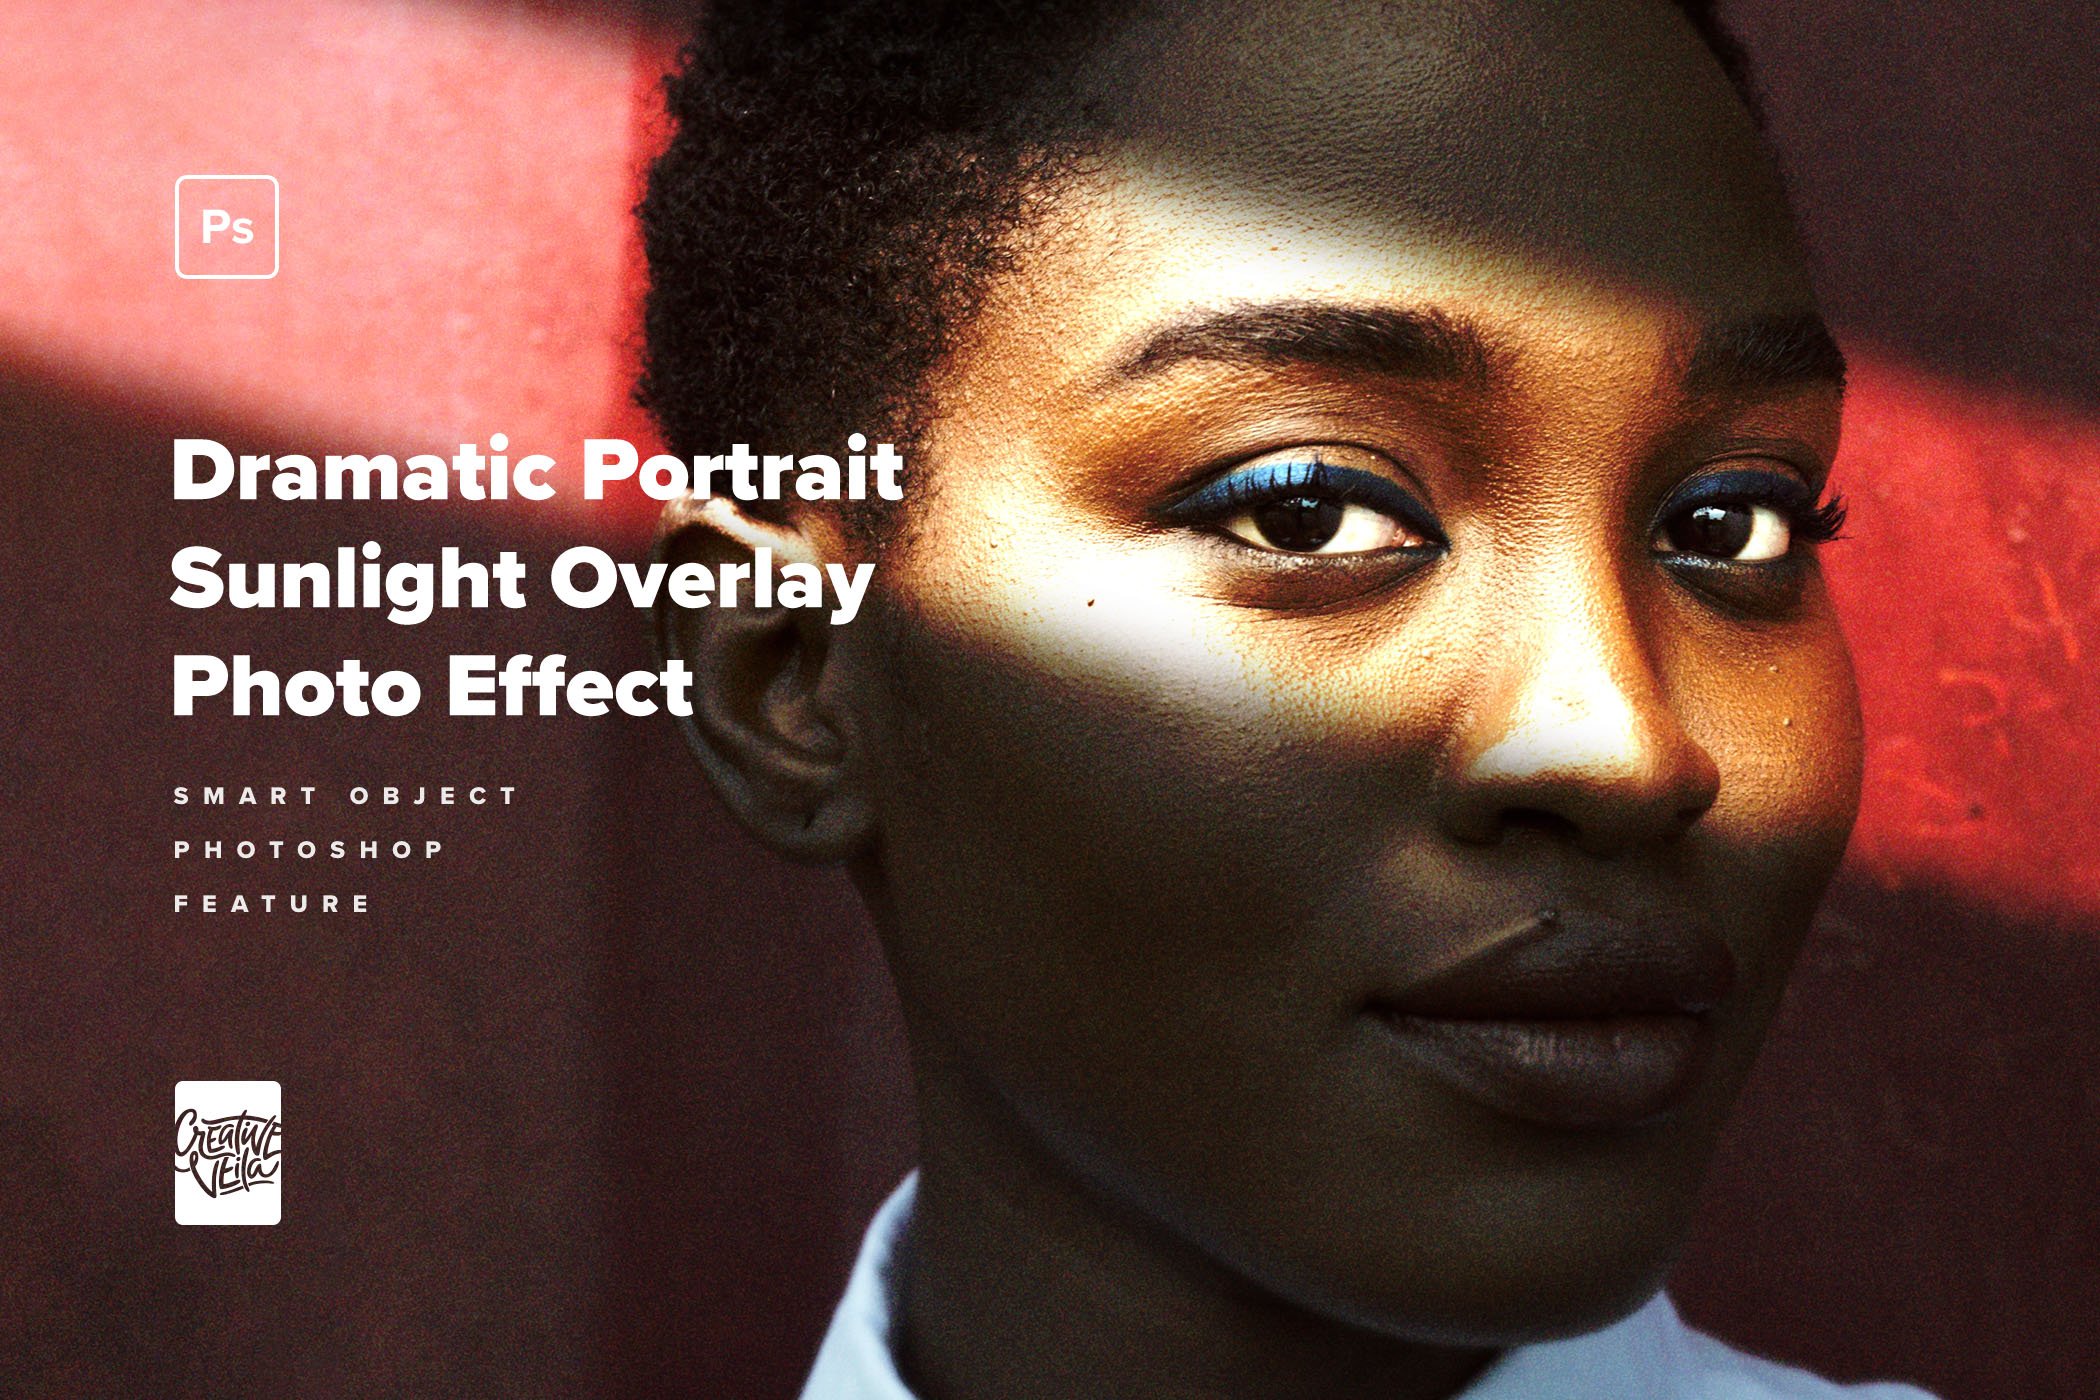 dramatic portrait sunlight overlay photo effect by creative veila studio 5 842